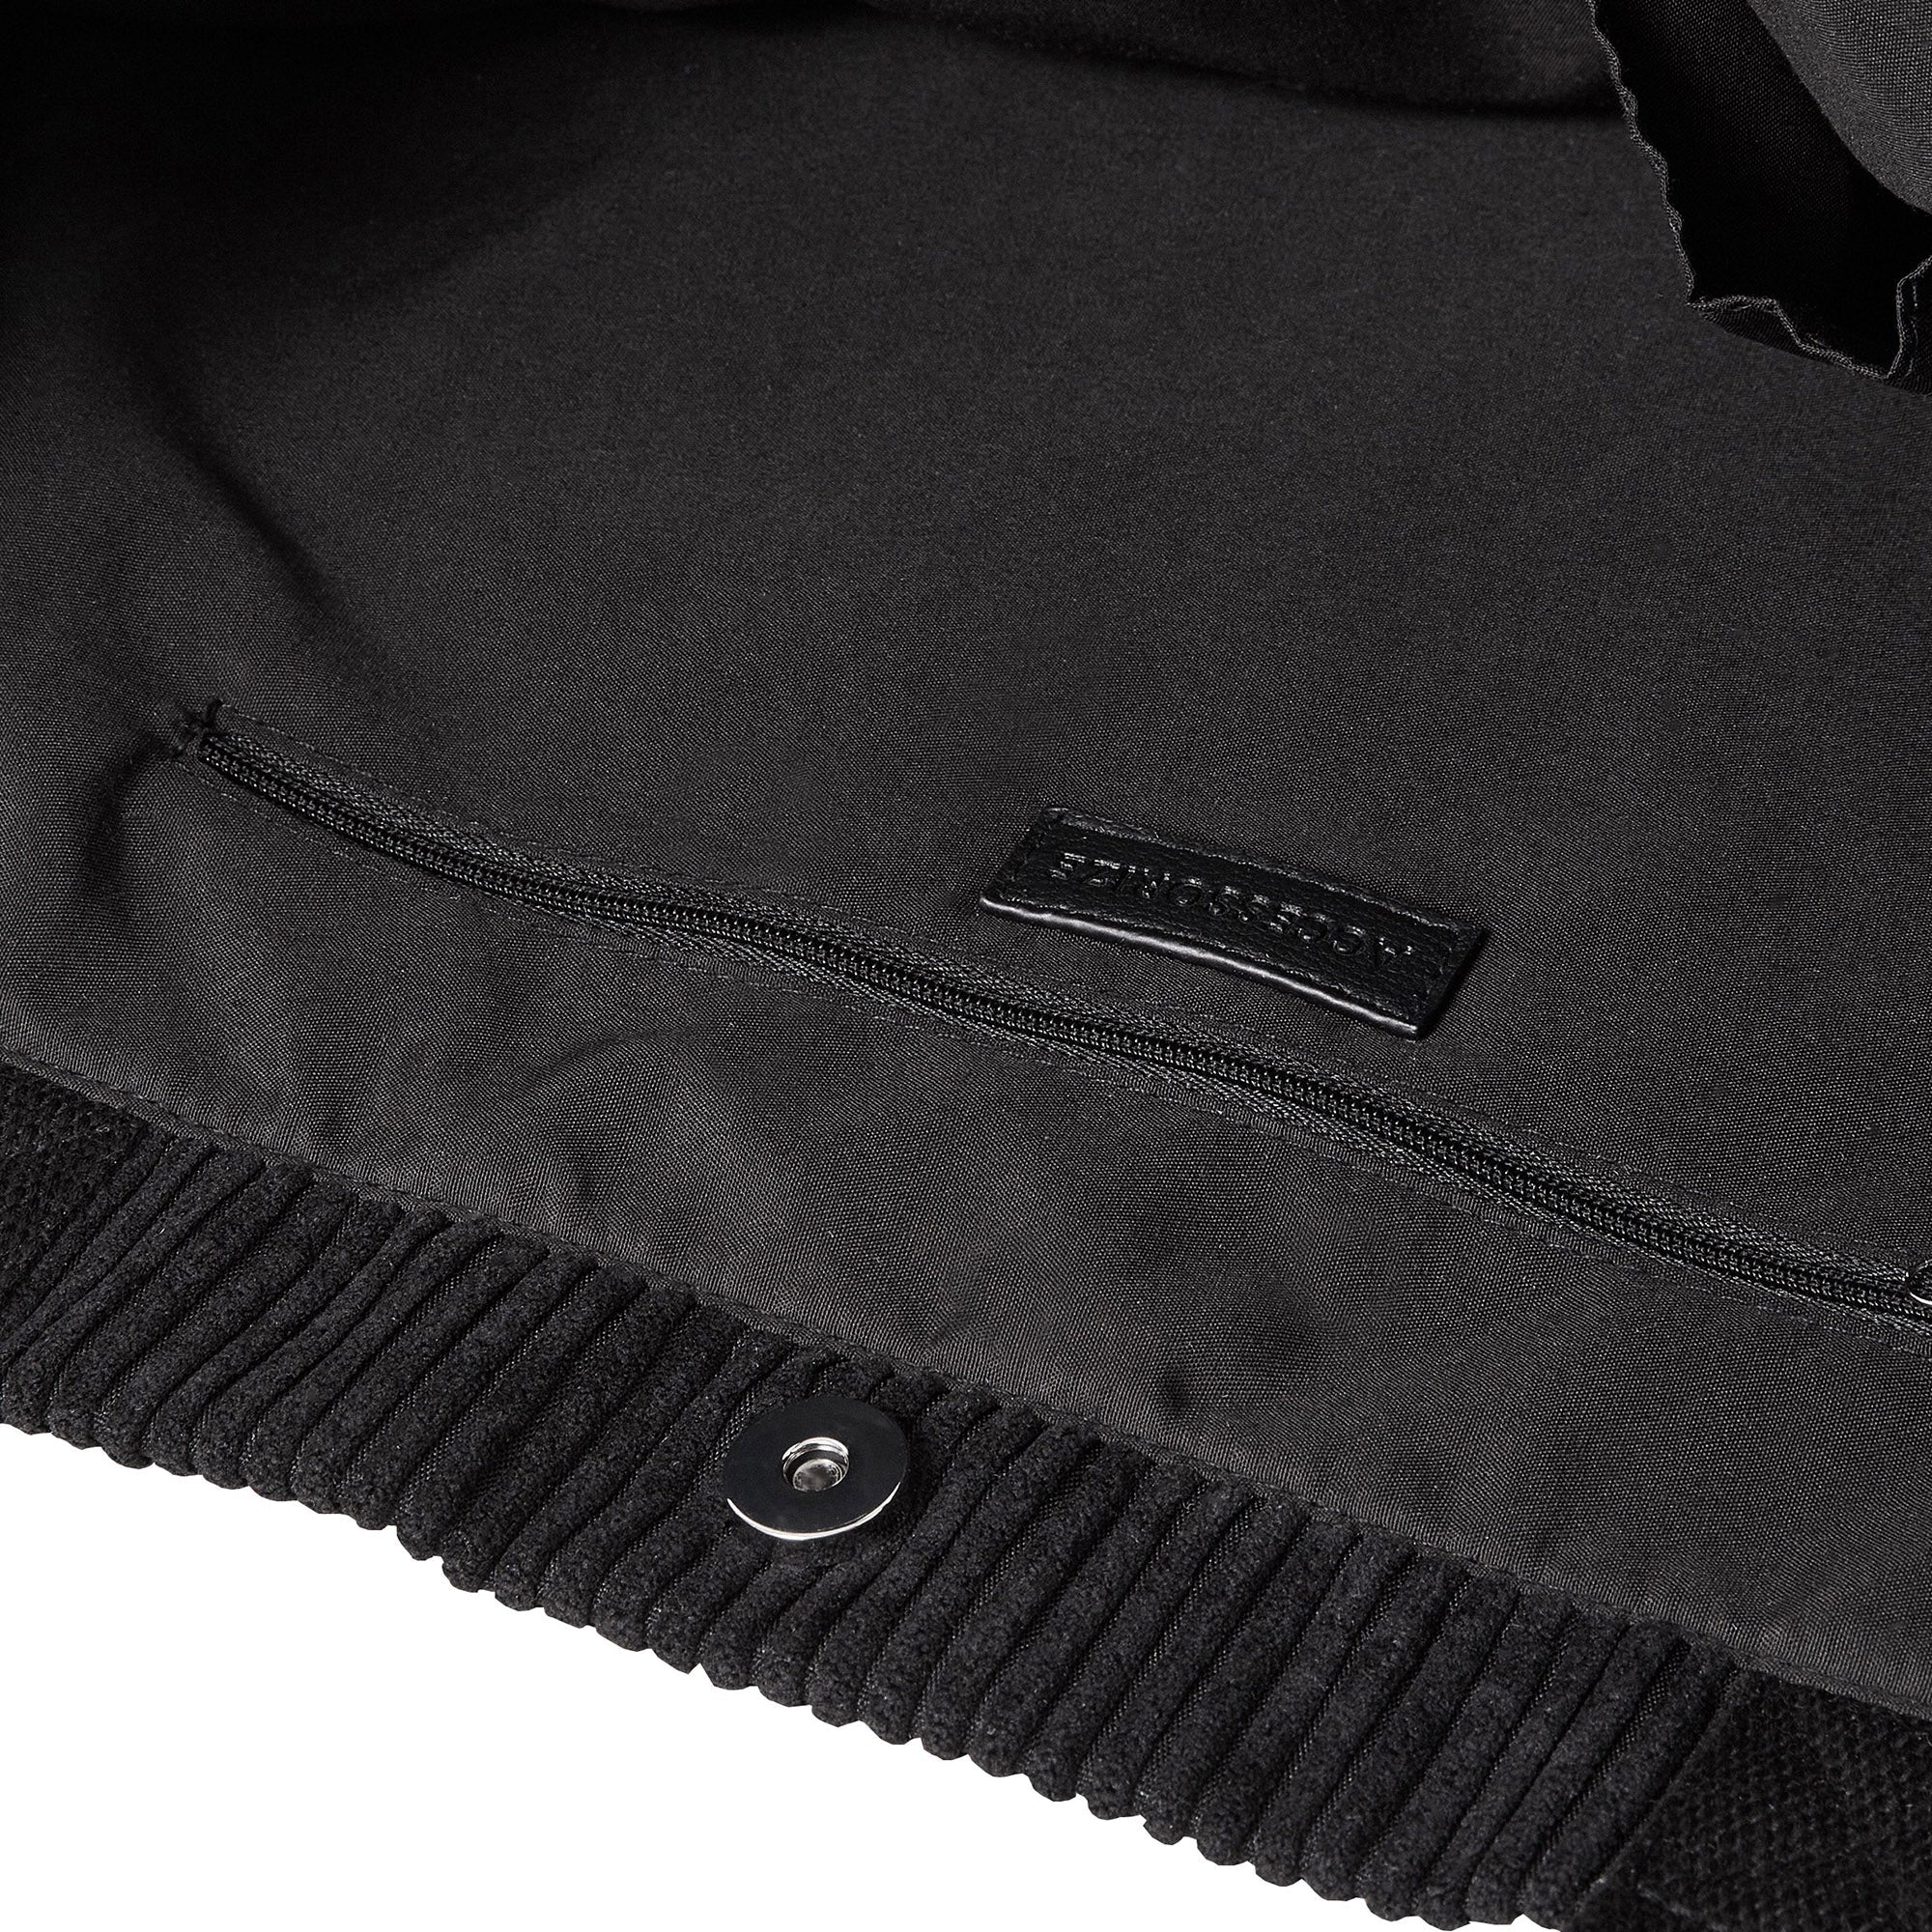 Accessorize London Women's Fabric Black Cord Shopper Bag